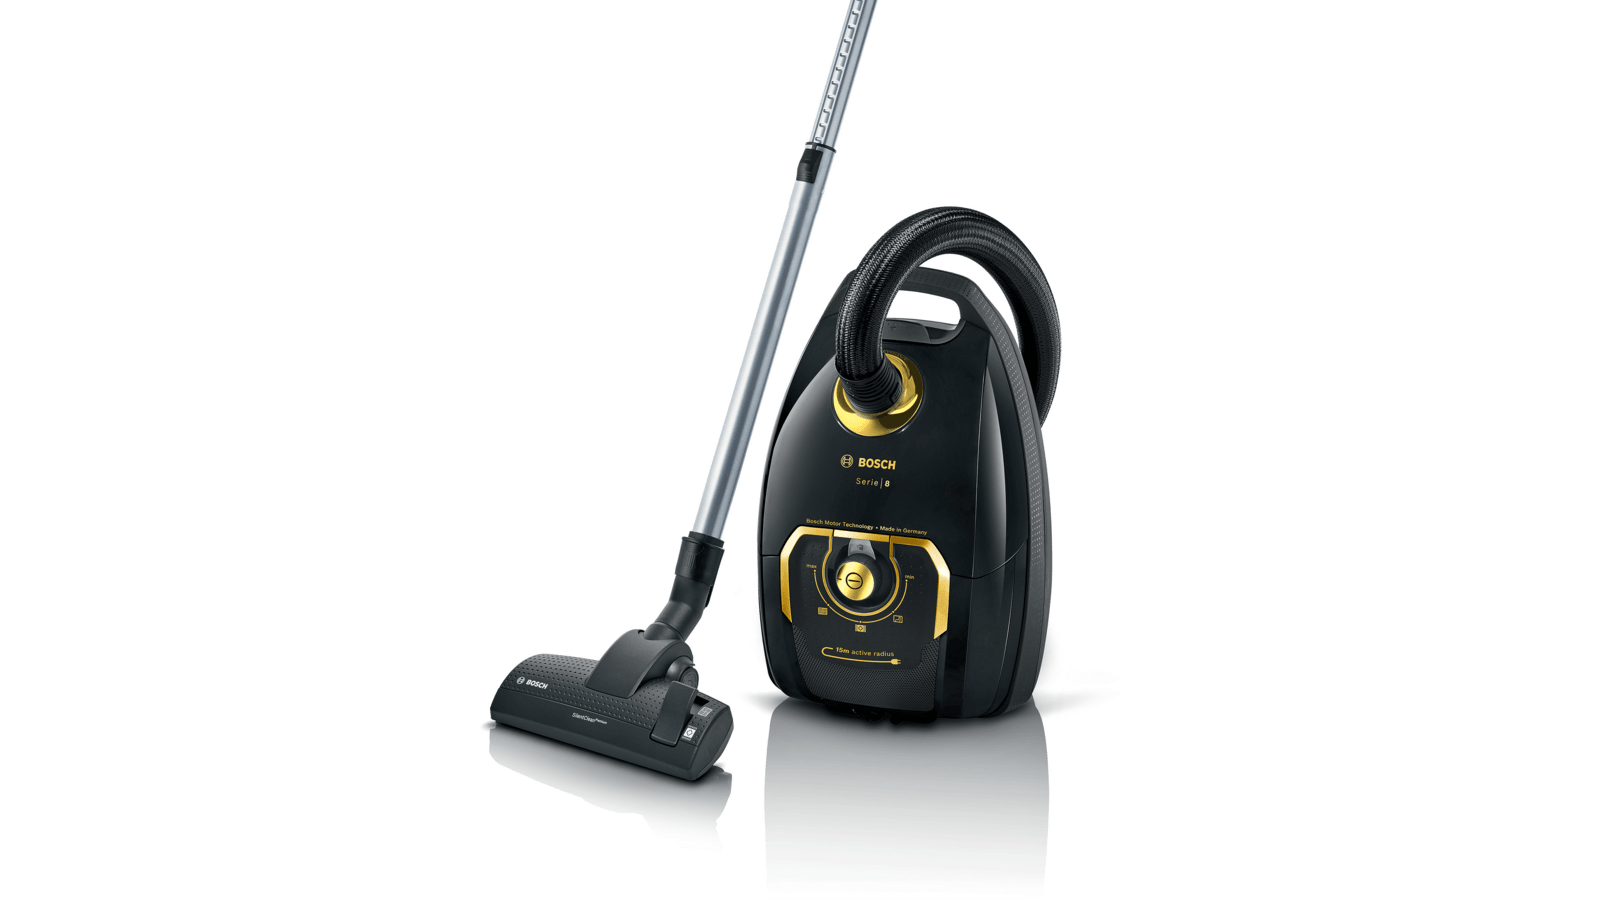 BOSCH Bagged Vacuum Cleaner 2200W - Black